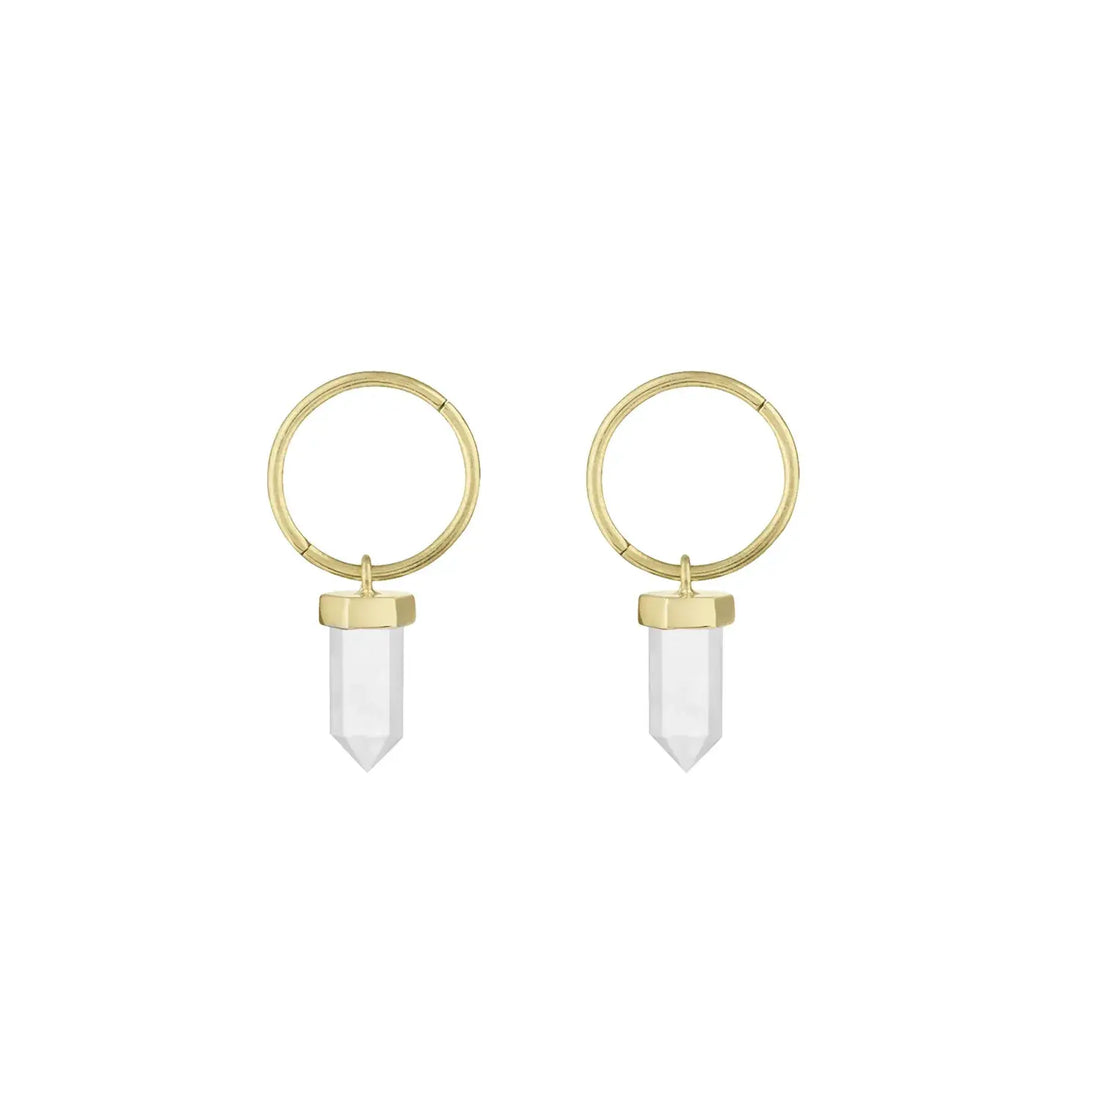 Clear Quartz Crystal Earrings - Fire Flies Sleepers 